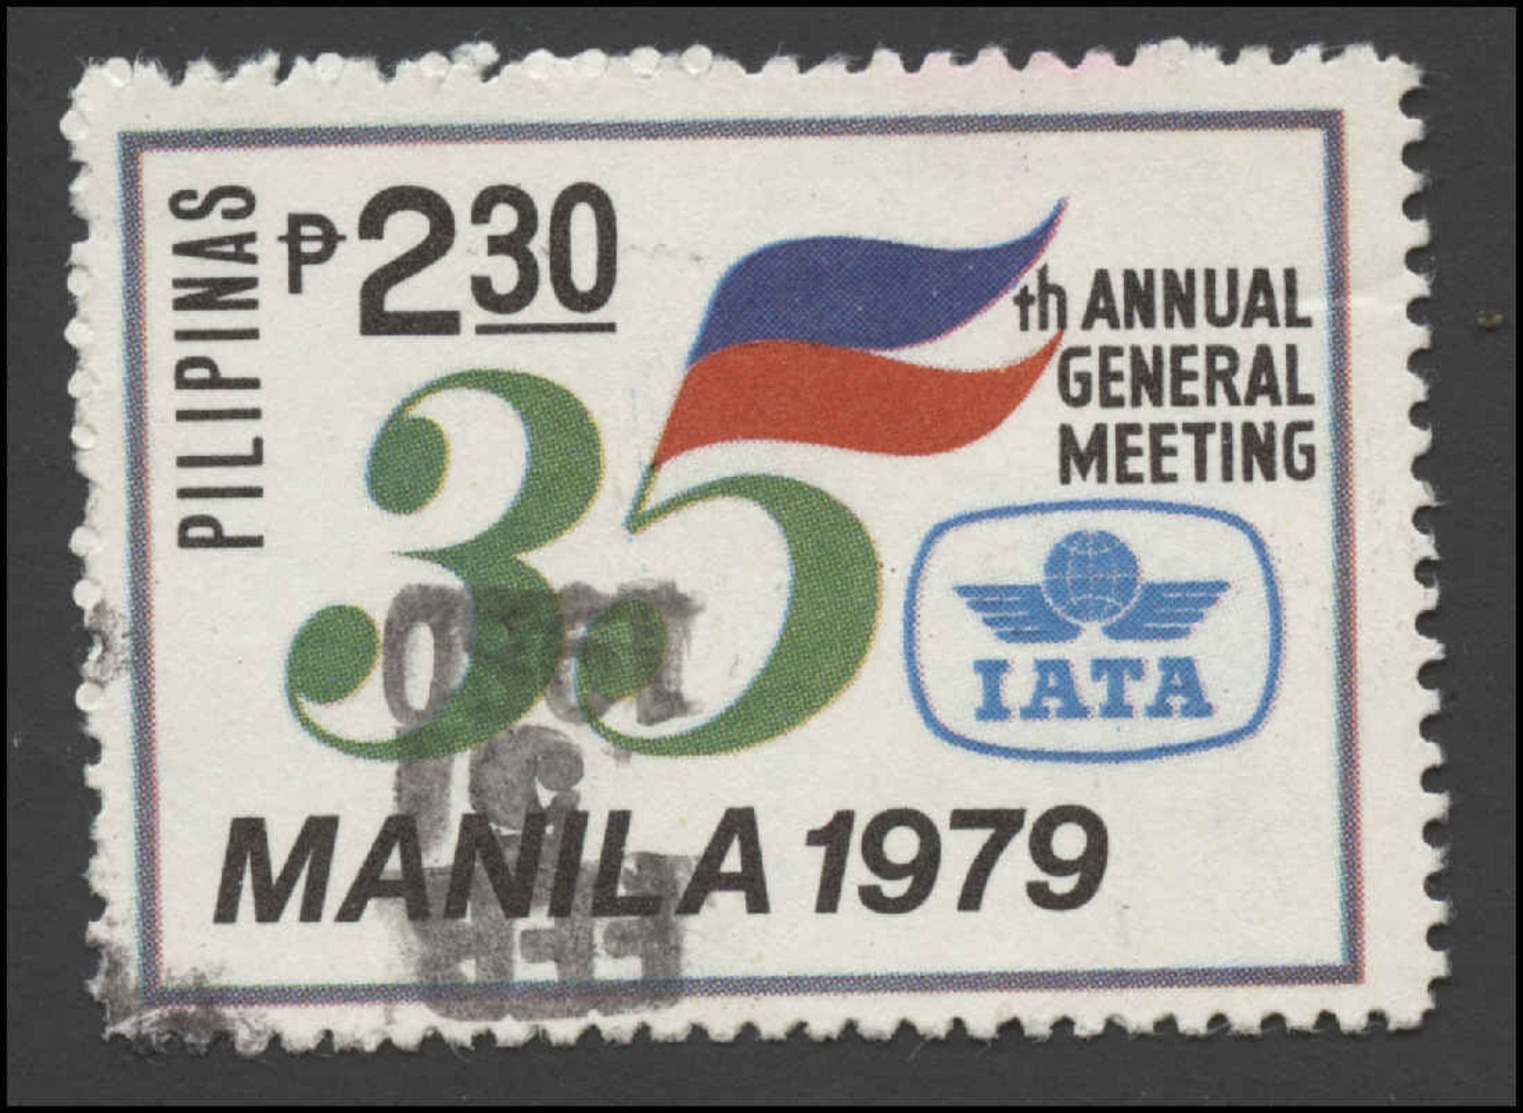 Philippines Scott #1442, 2.30p Multicolored (1979) Transport Association Emblem, Used - Philippines